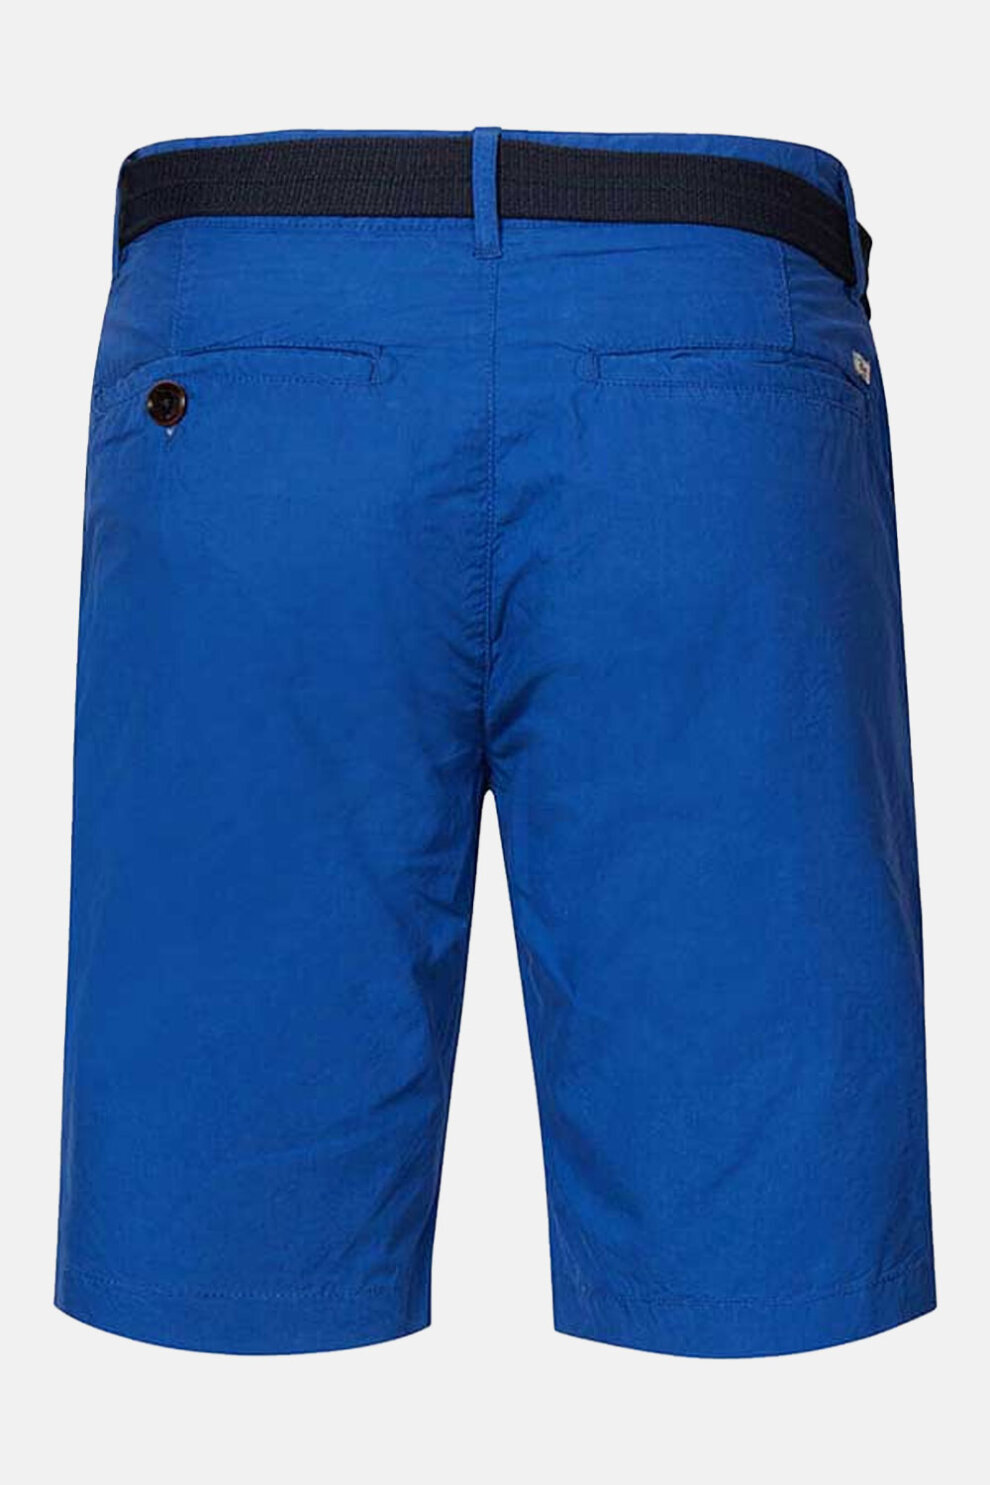 MUŠKARCI - Kratke hlače - Petrol chino kratke hlače - Plava